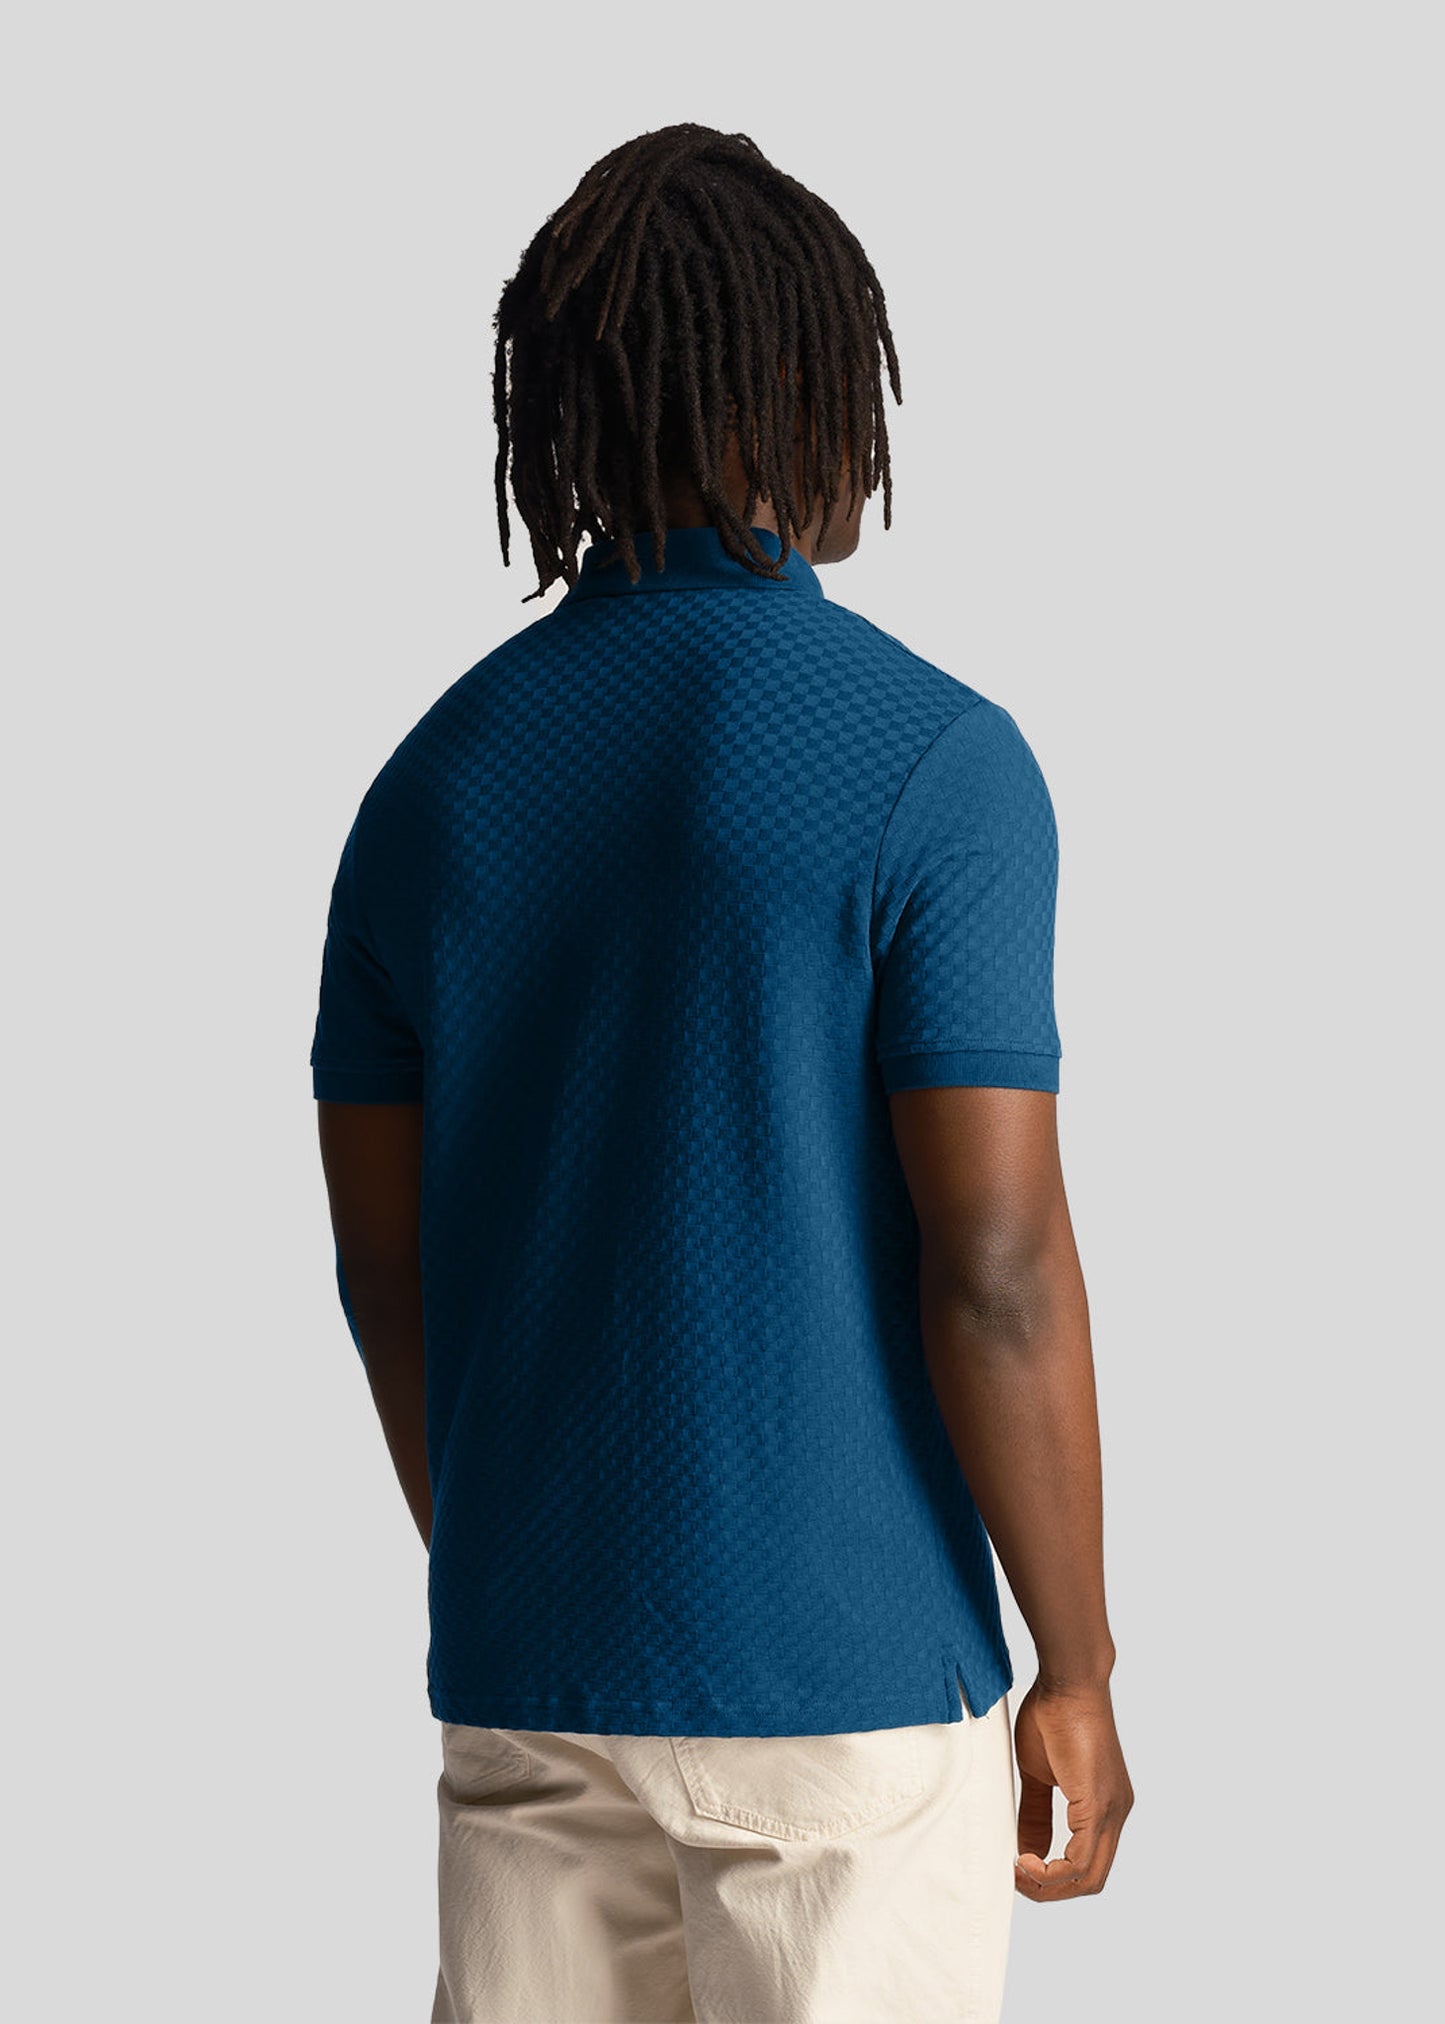 Grid texture polo shirt - apres navy